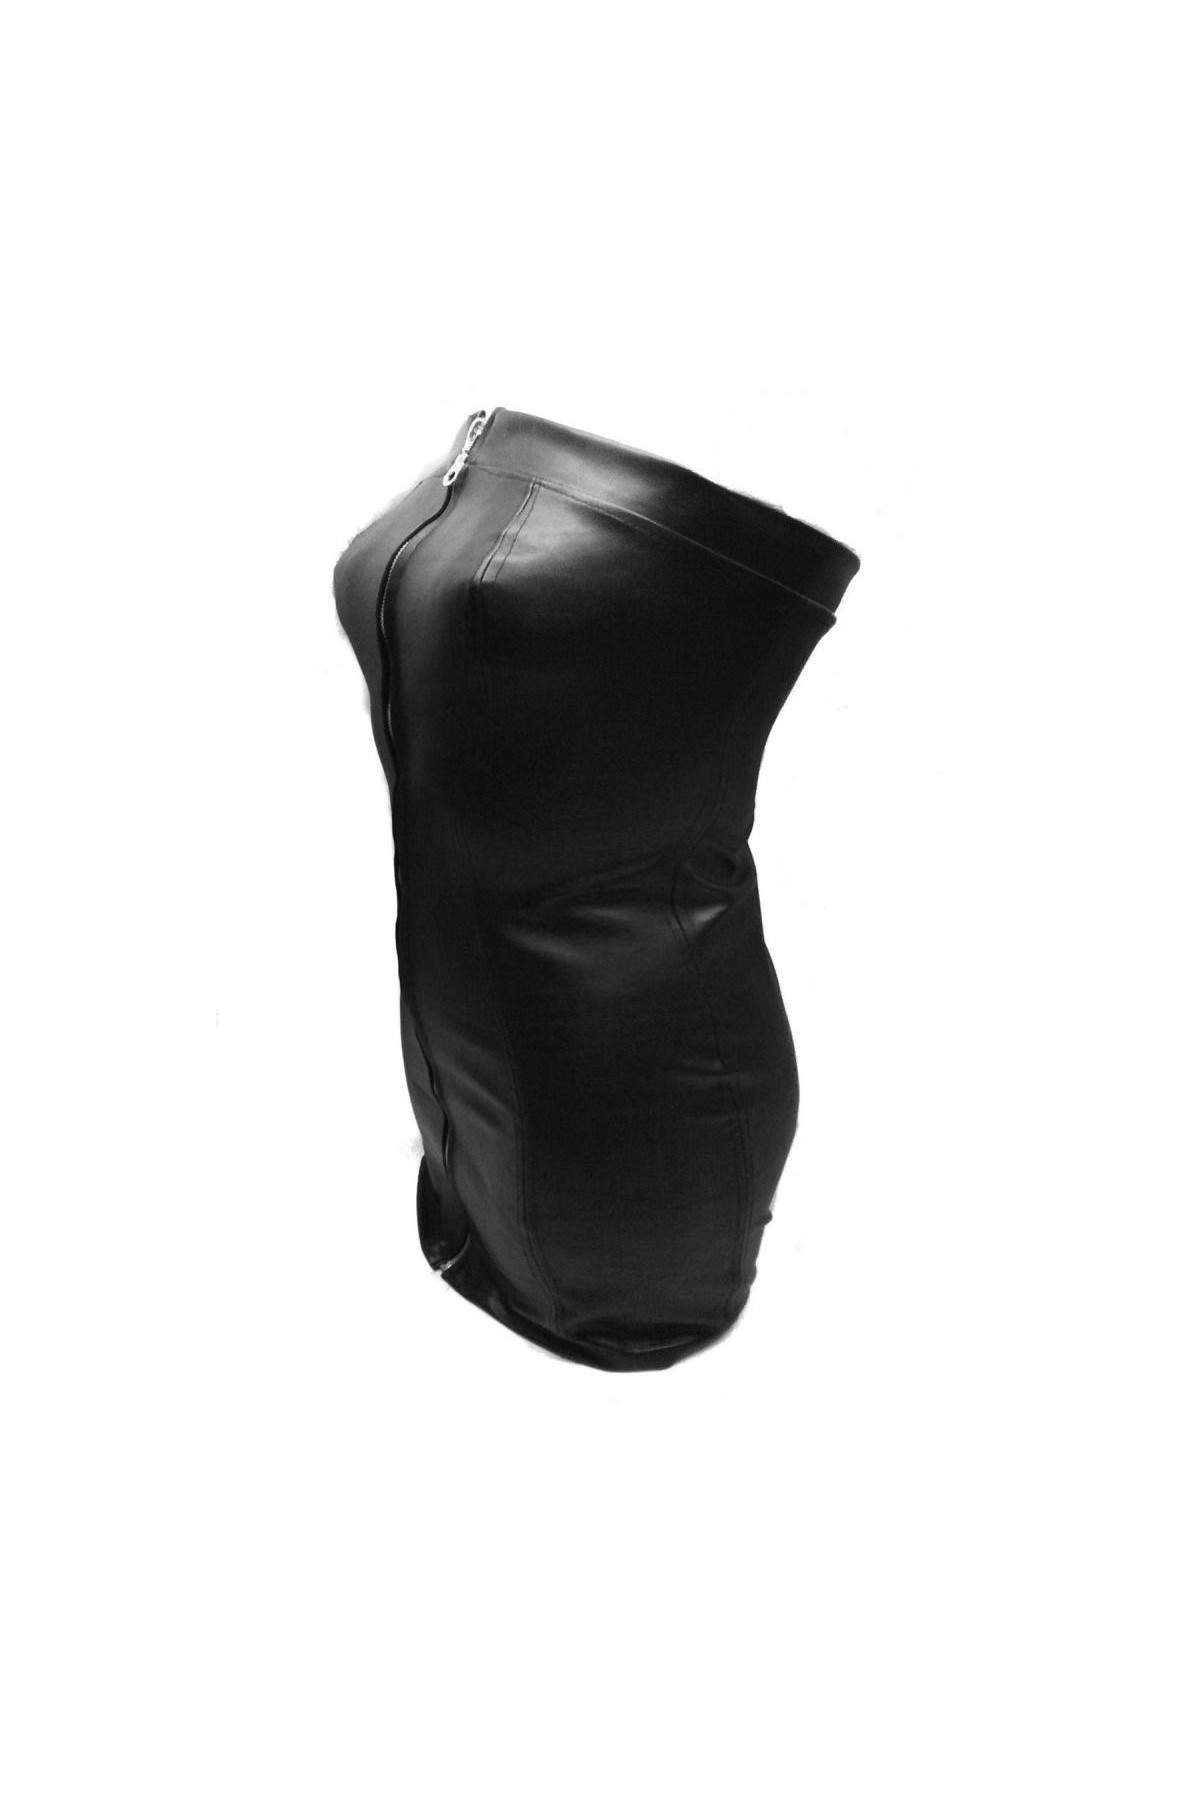 Designer Leder Kleid schwarz Größe L - XXL (44 - 52) ab 35,00 € - 